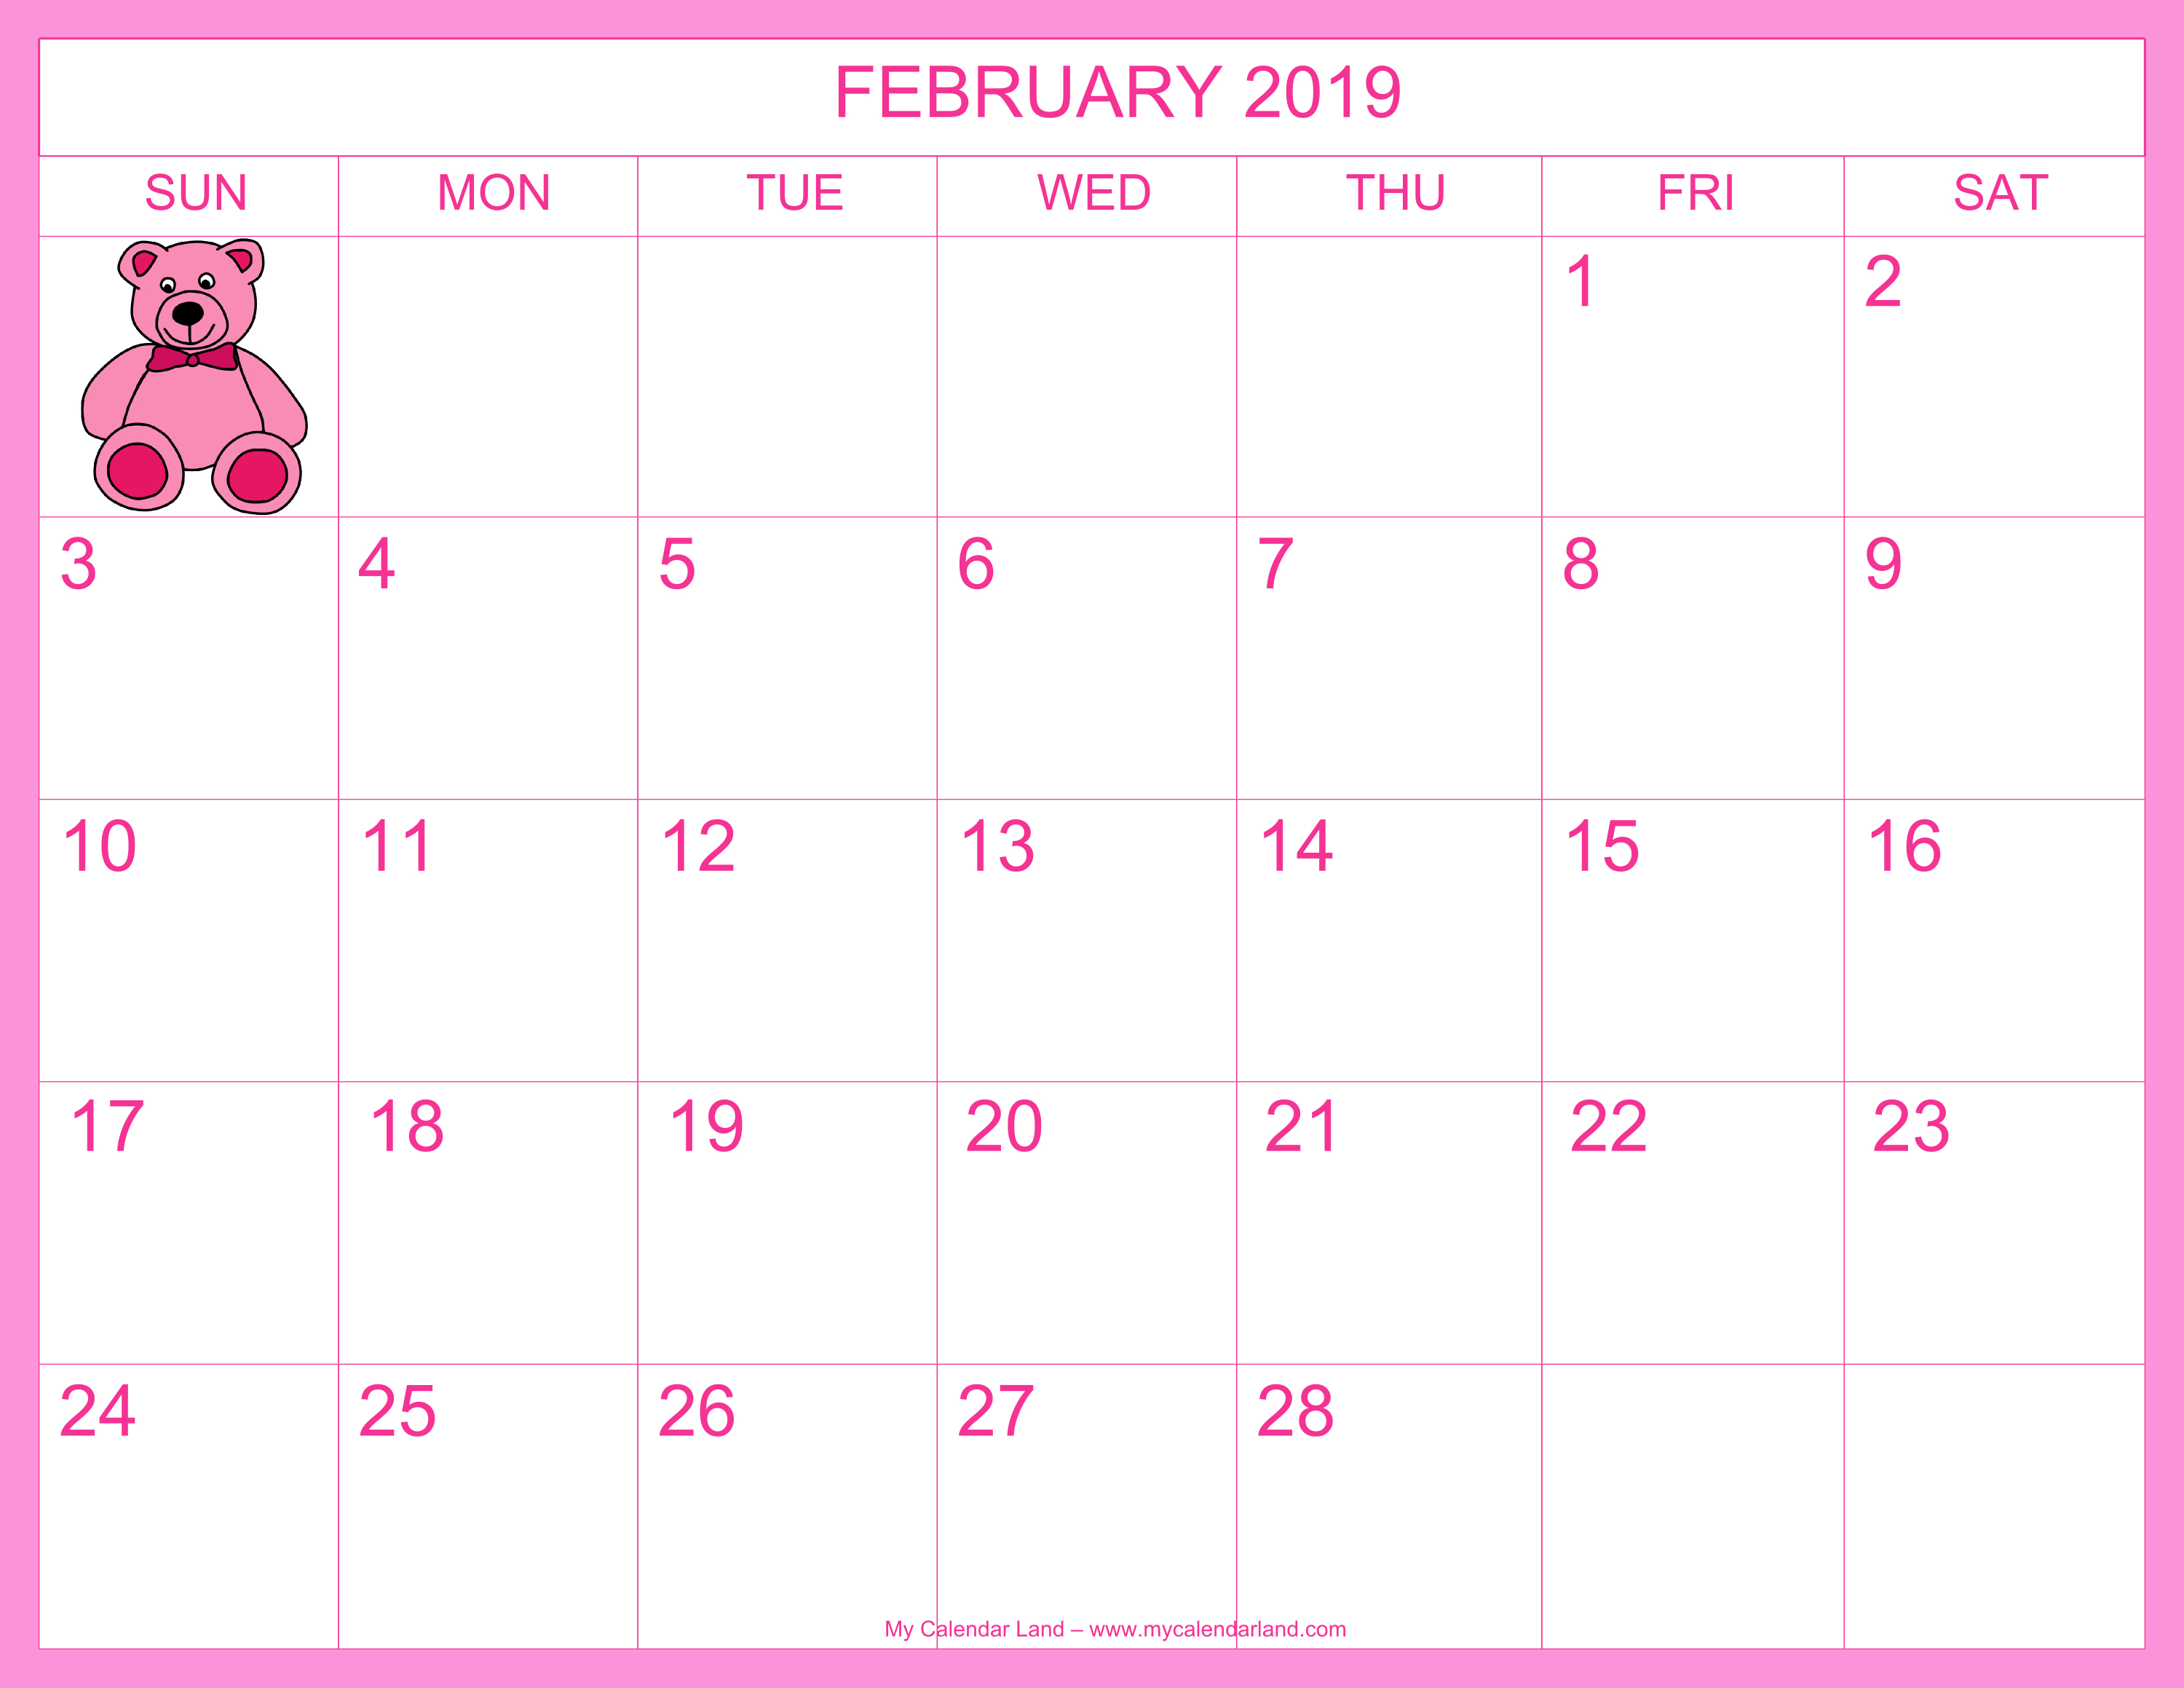 February 2020 Calendar - My Calendar Land